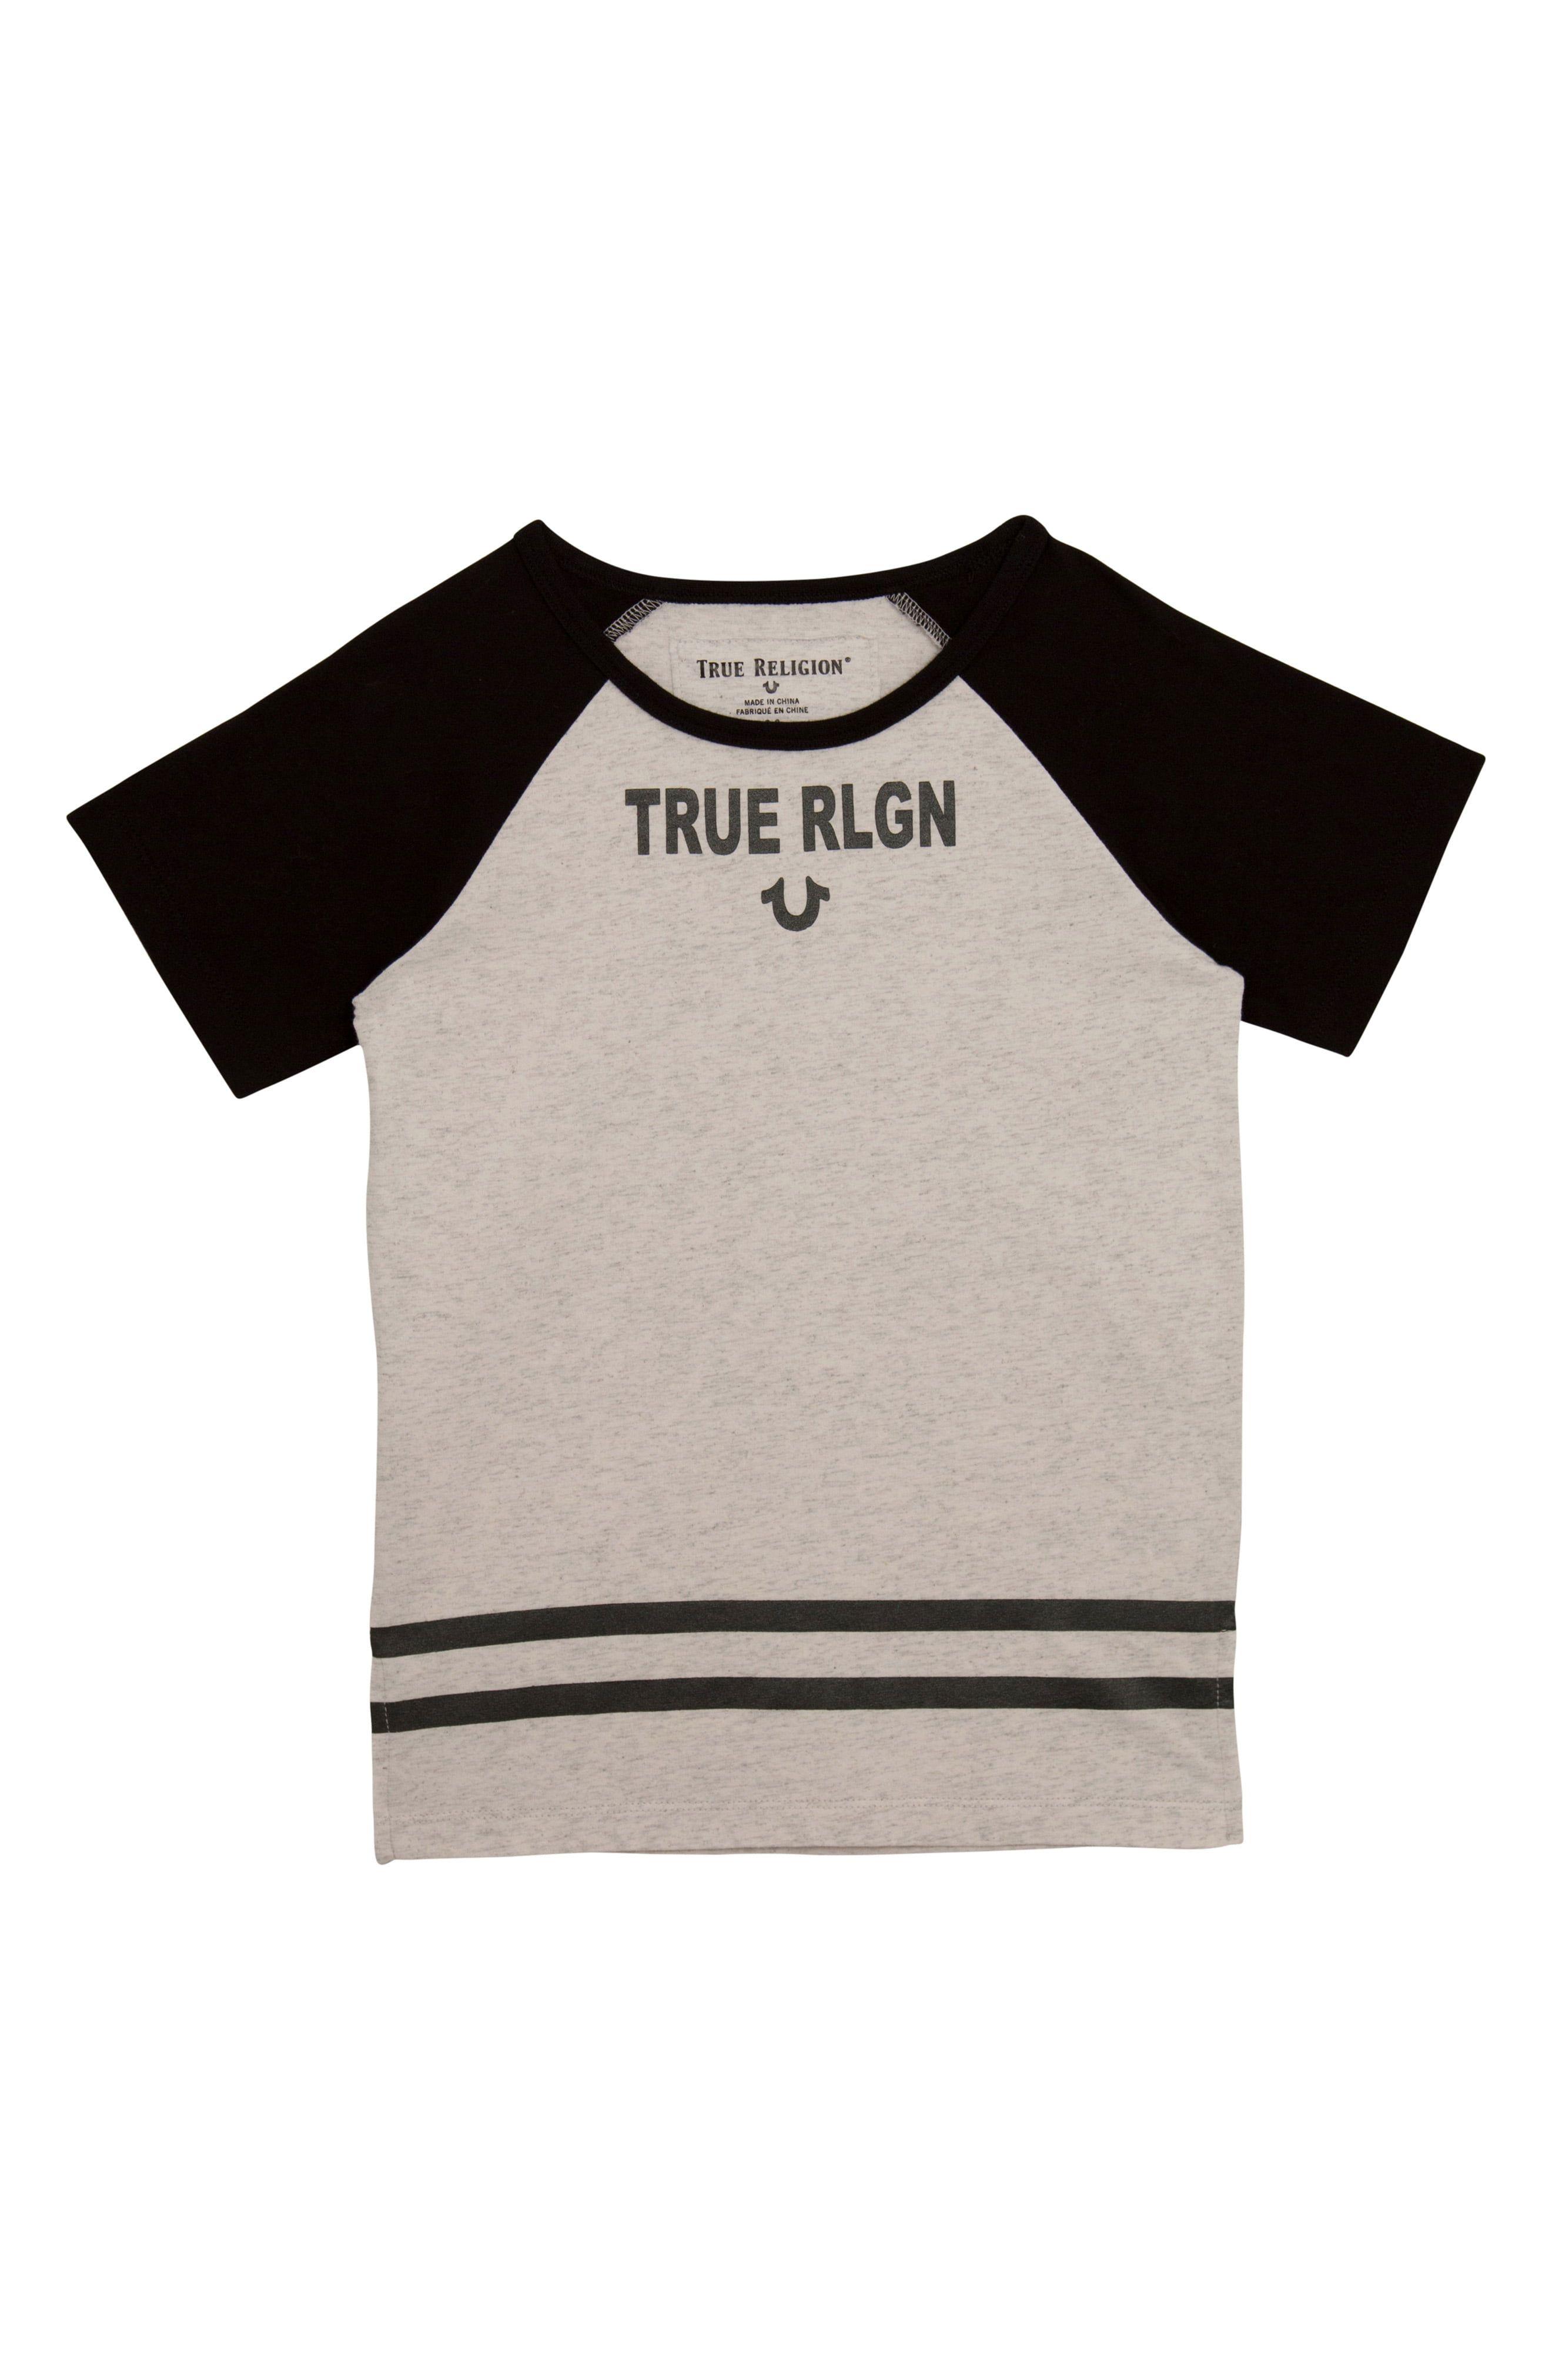 Truereligionbrandjeans Logo - UPC 190162494424 Boy's True Religion Brand Jeans Logo